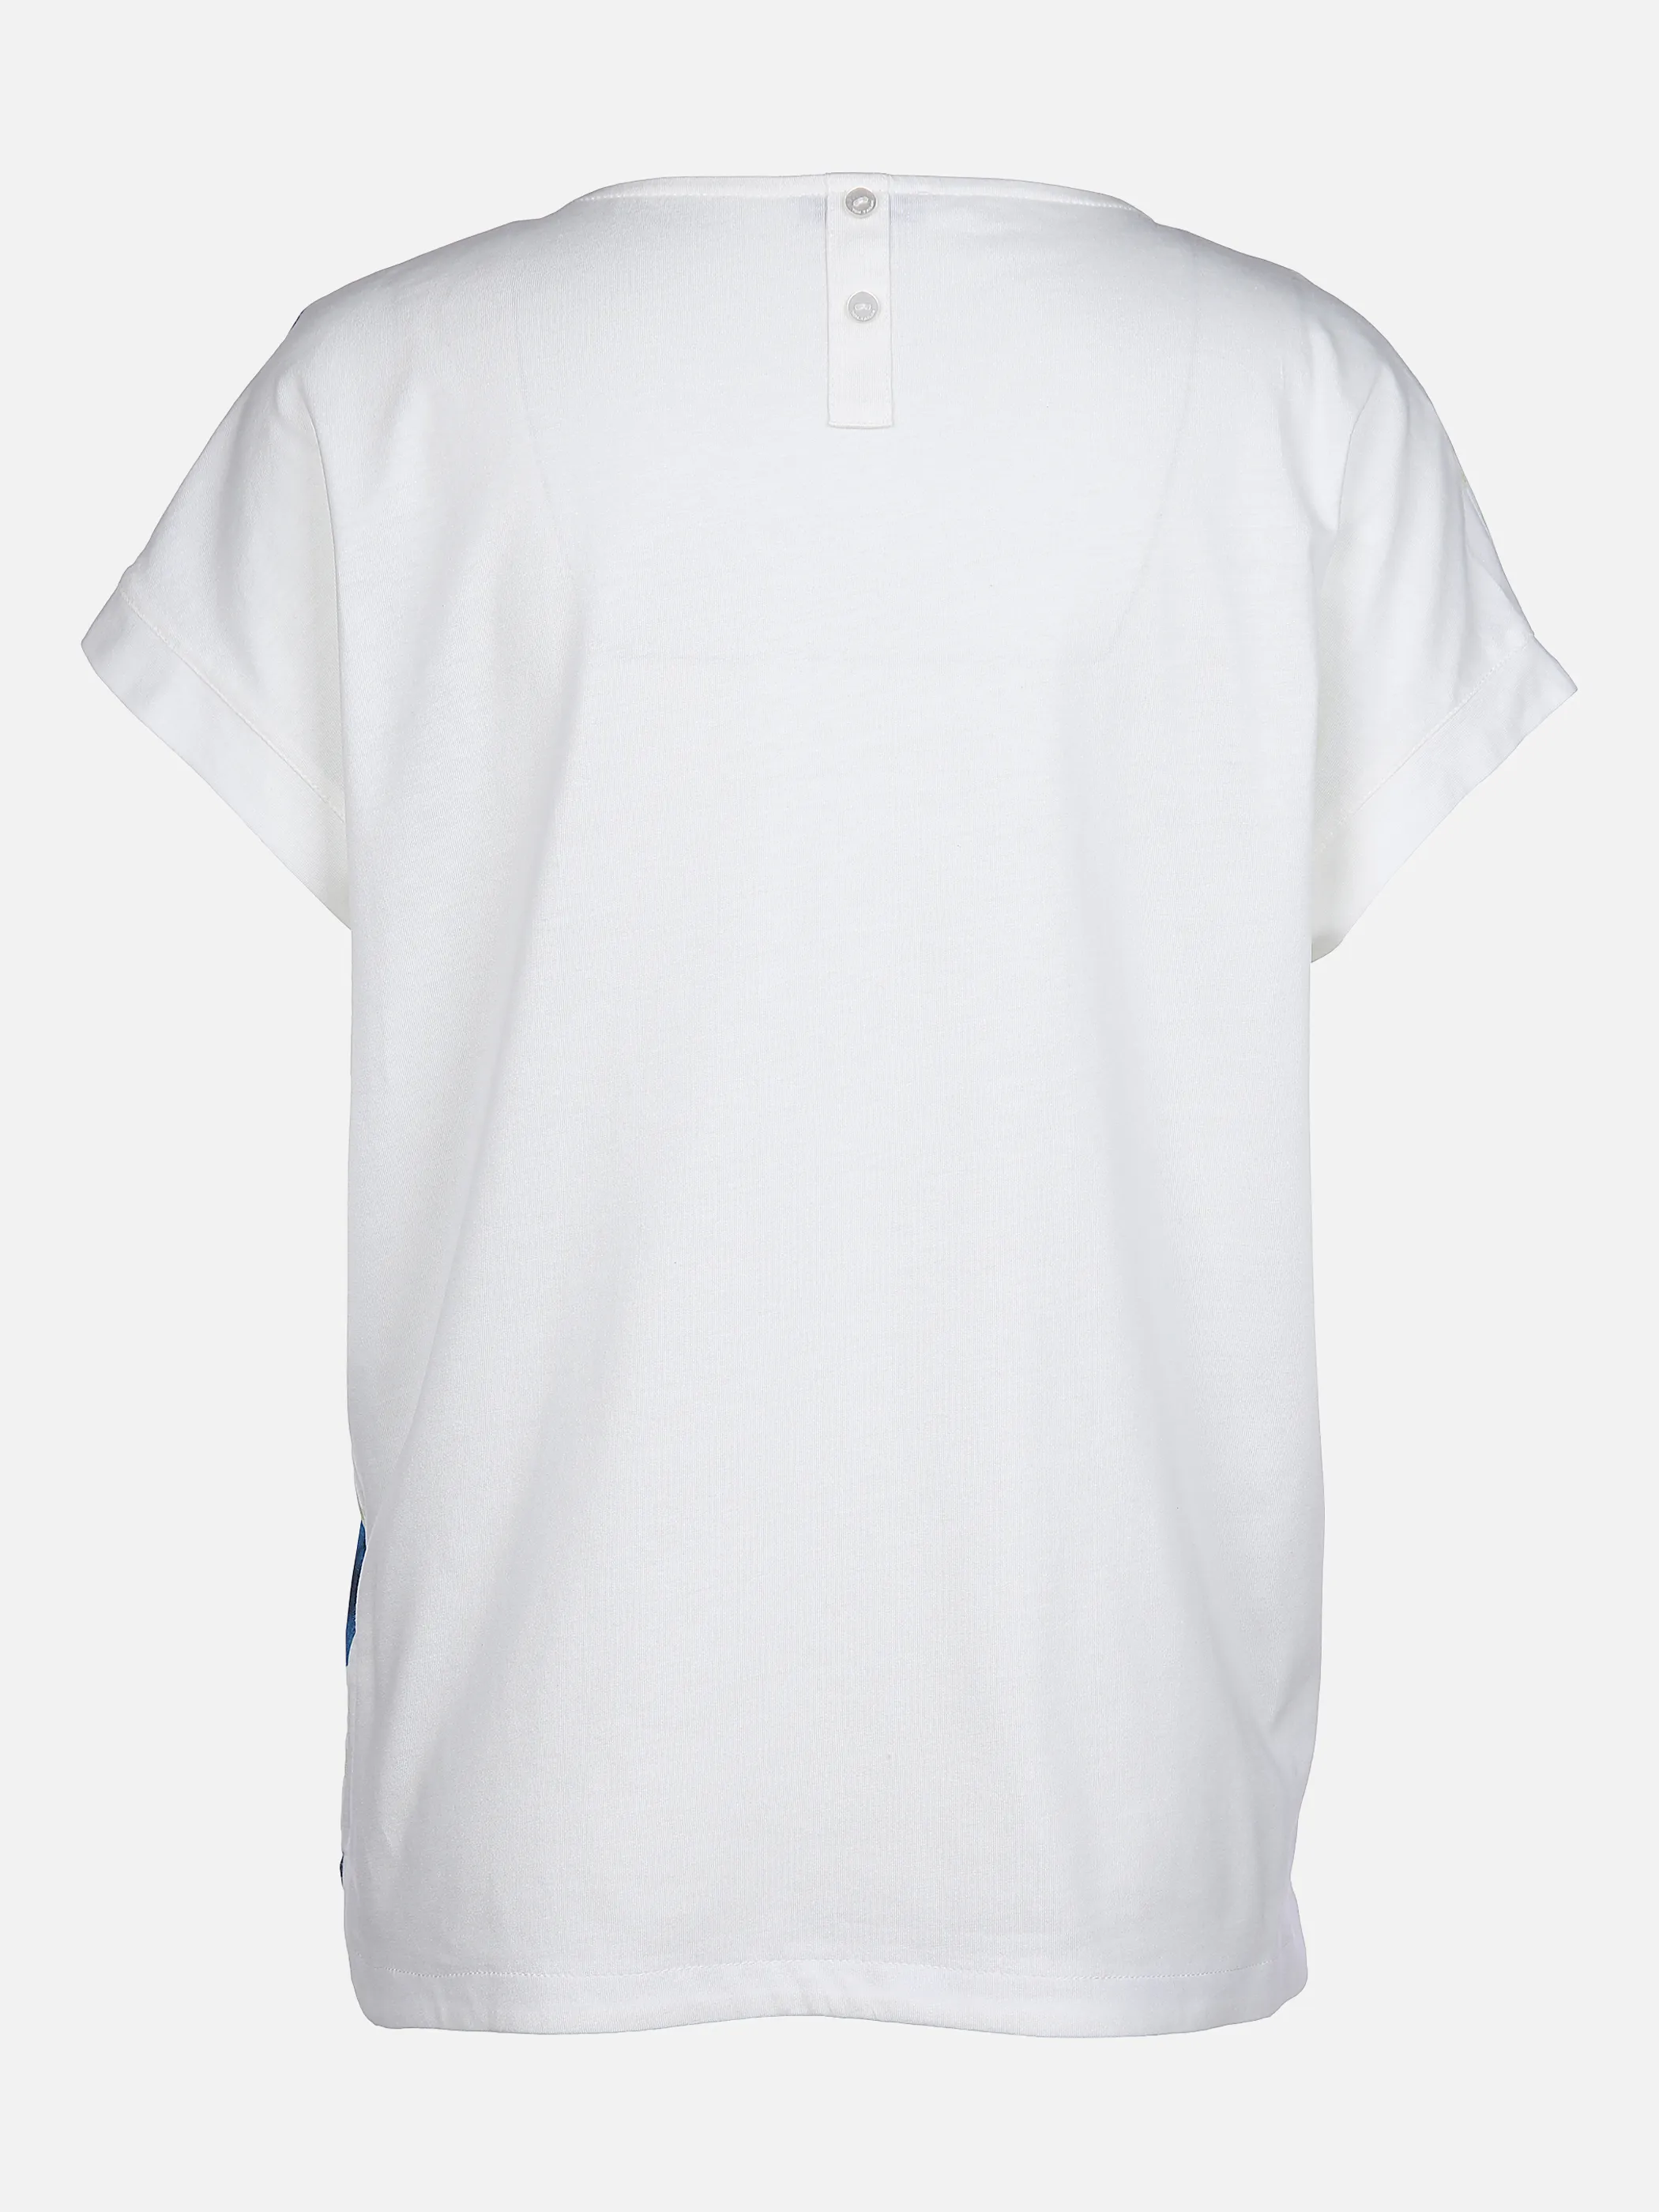 Tom Tailor 1031211 T-shirt fabric mix Weiß 865217 29525 2